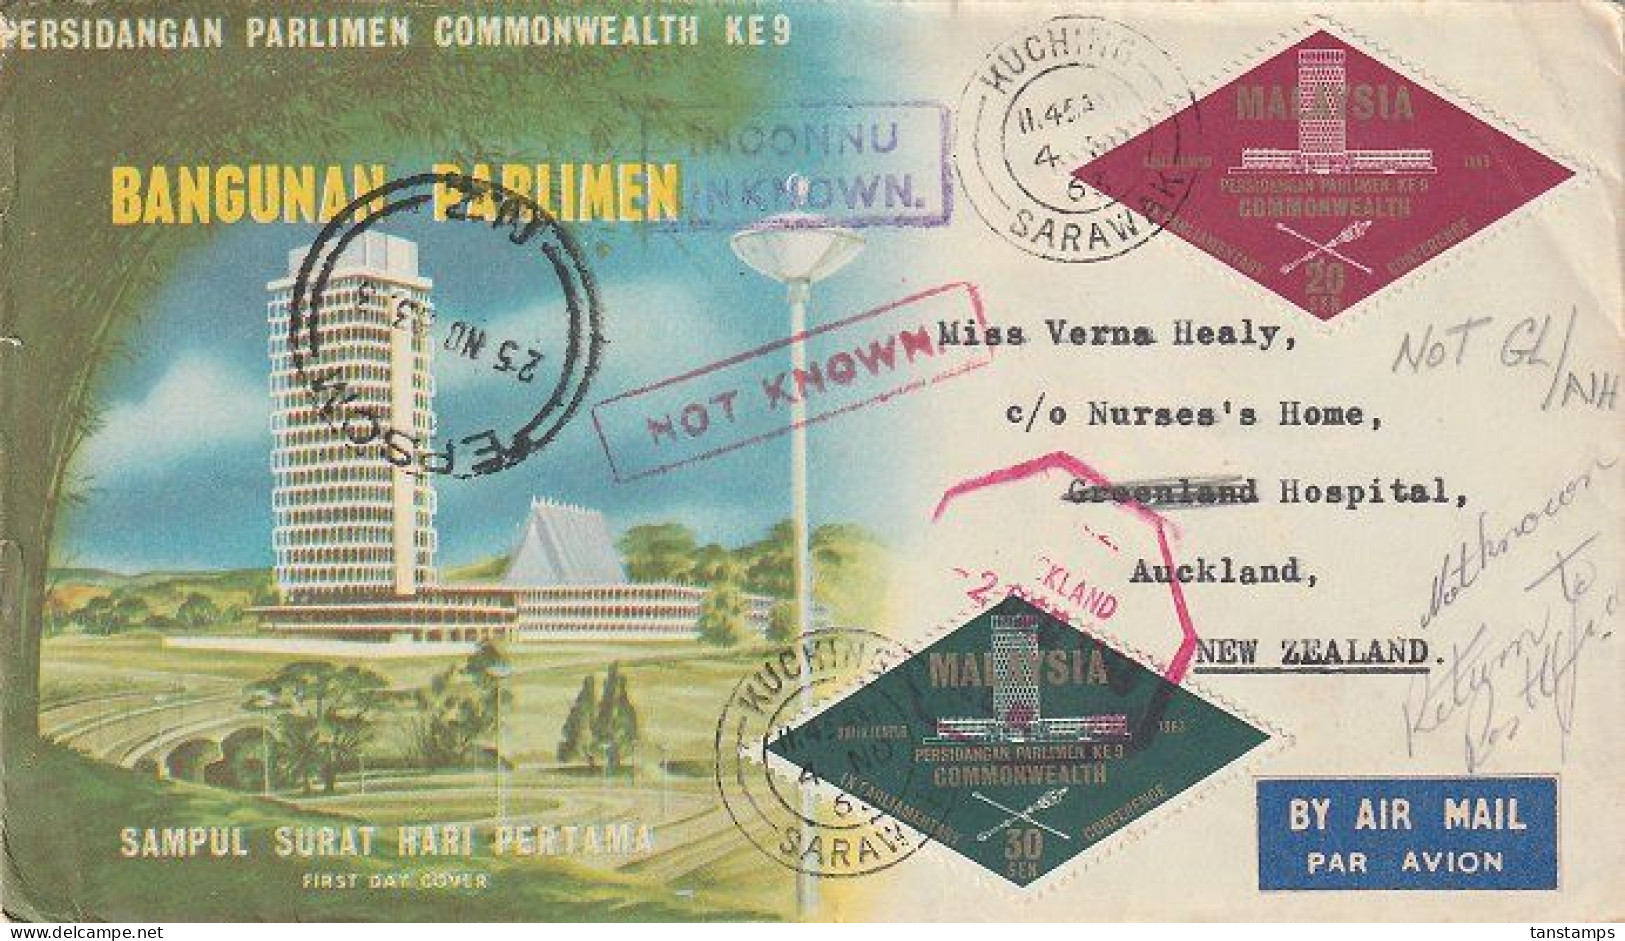 SARAWAK - NEW ZEALAND MALAYA 1963 PARLIAMENT BUILDING FDC NOT KNOWN INSTRUCTIONAL MARKS - Sarawak (...-1963)